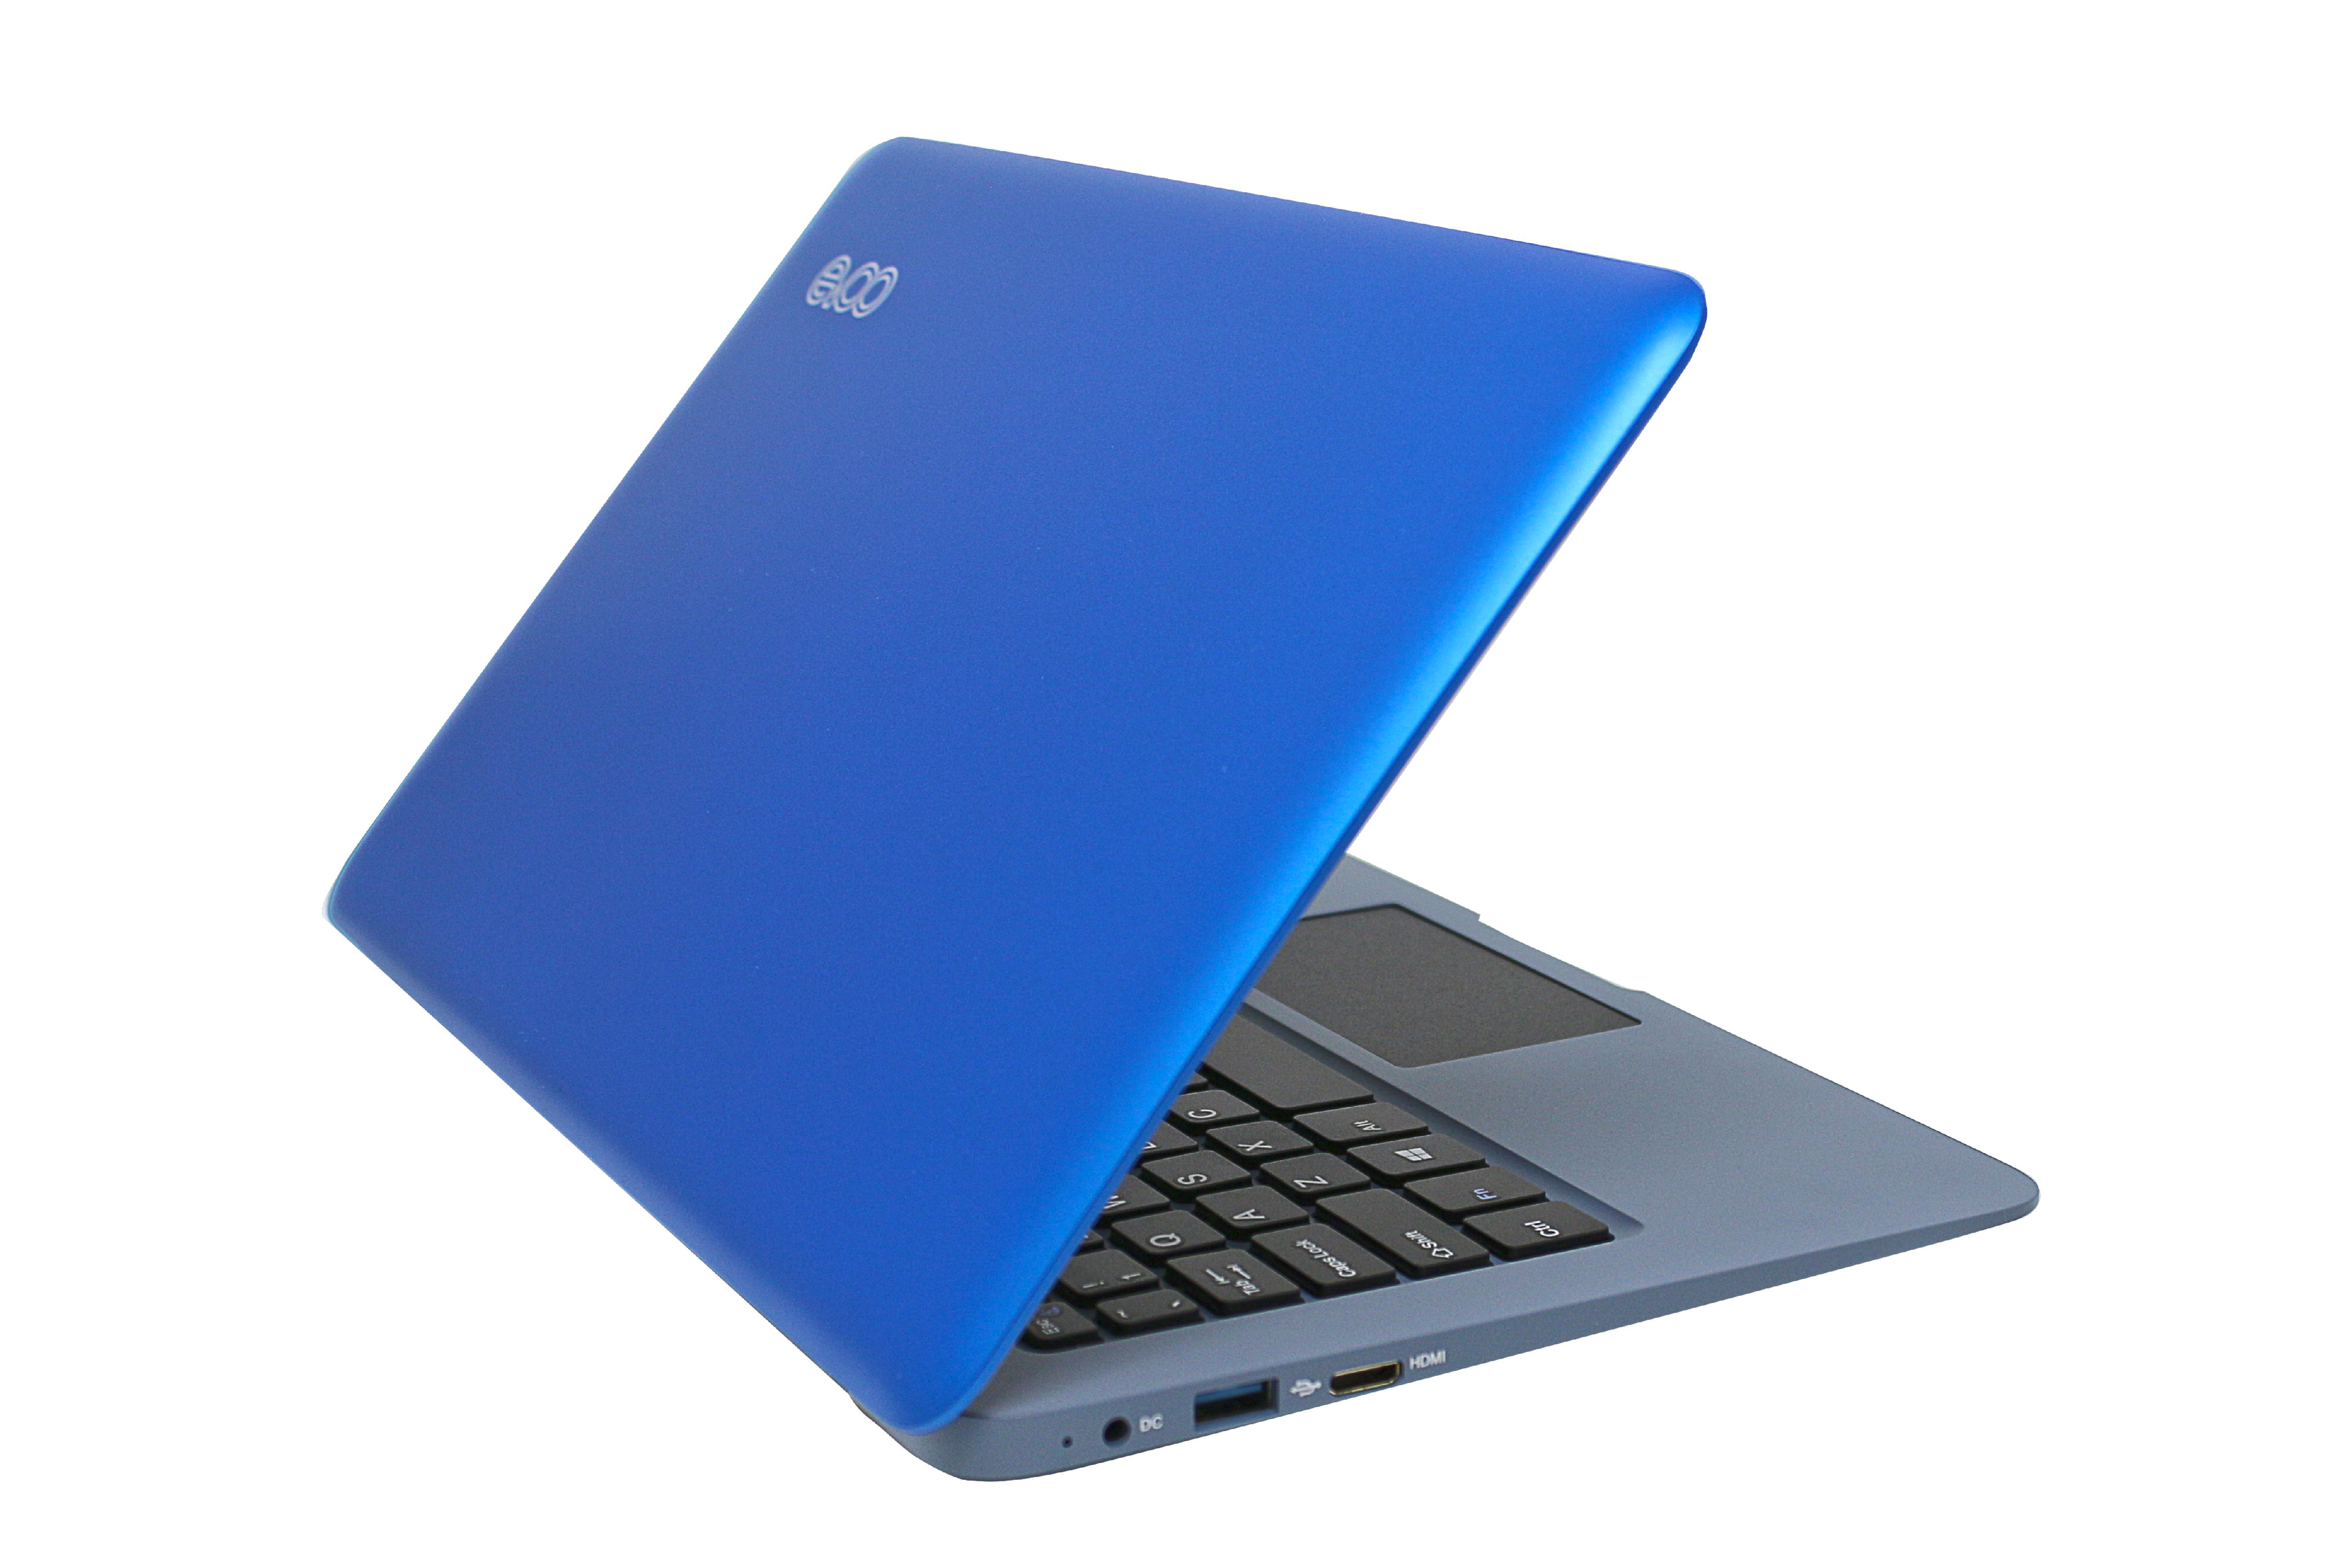 EVOO 10.1" Ultra Thin Laptop, Quad Core Processor, 2GB Memory, 32GB Storage, Mini HDMI, Front Camera, Windows 10 Home, Blue - image 1 of 7